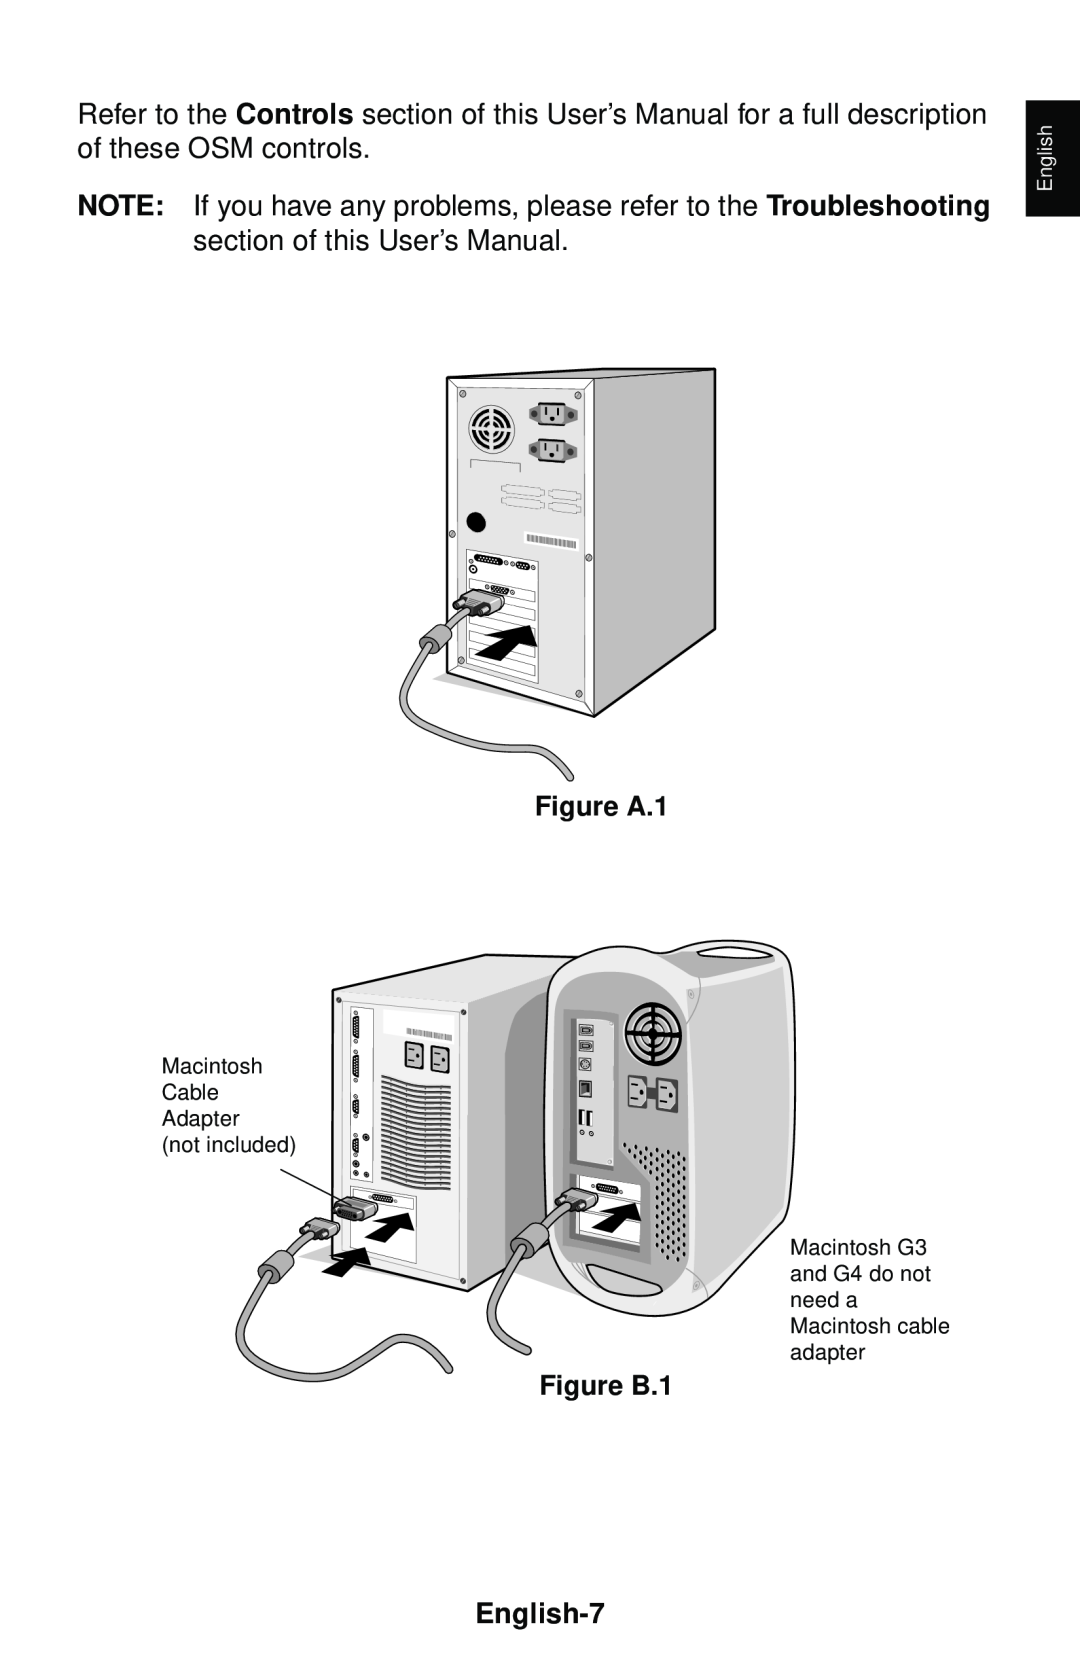 NEC LCD1550V user manual English-7, Figure A.1, Figure B.1 